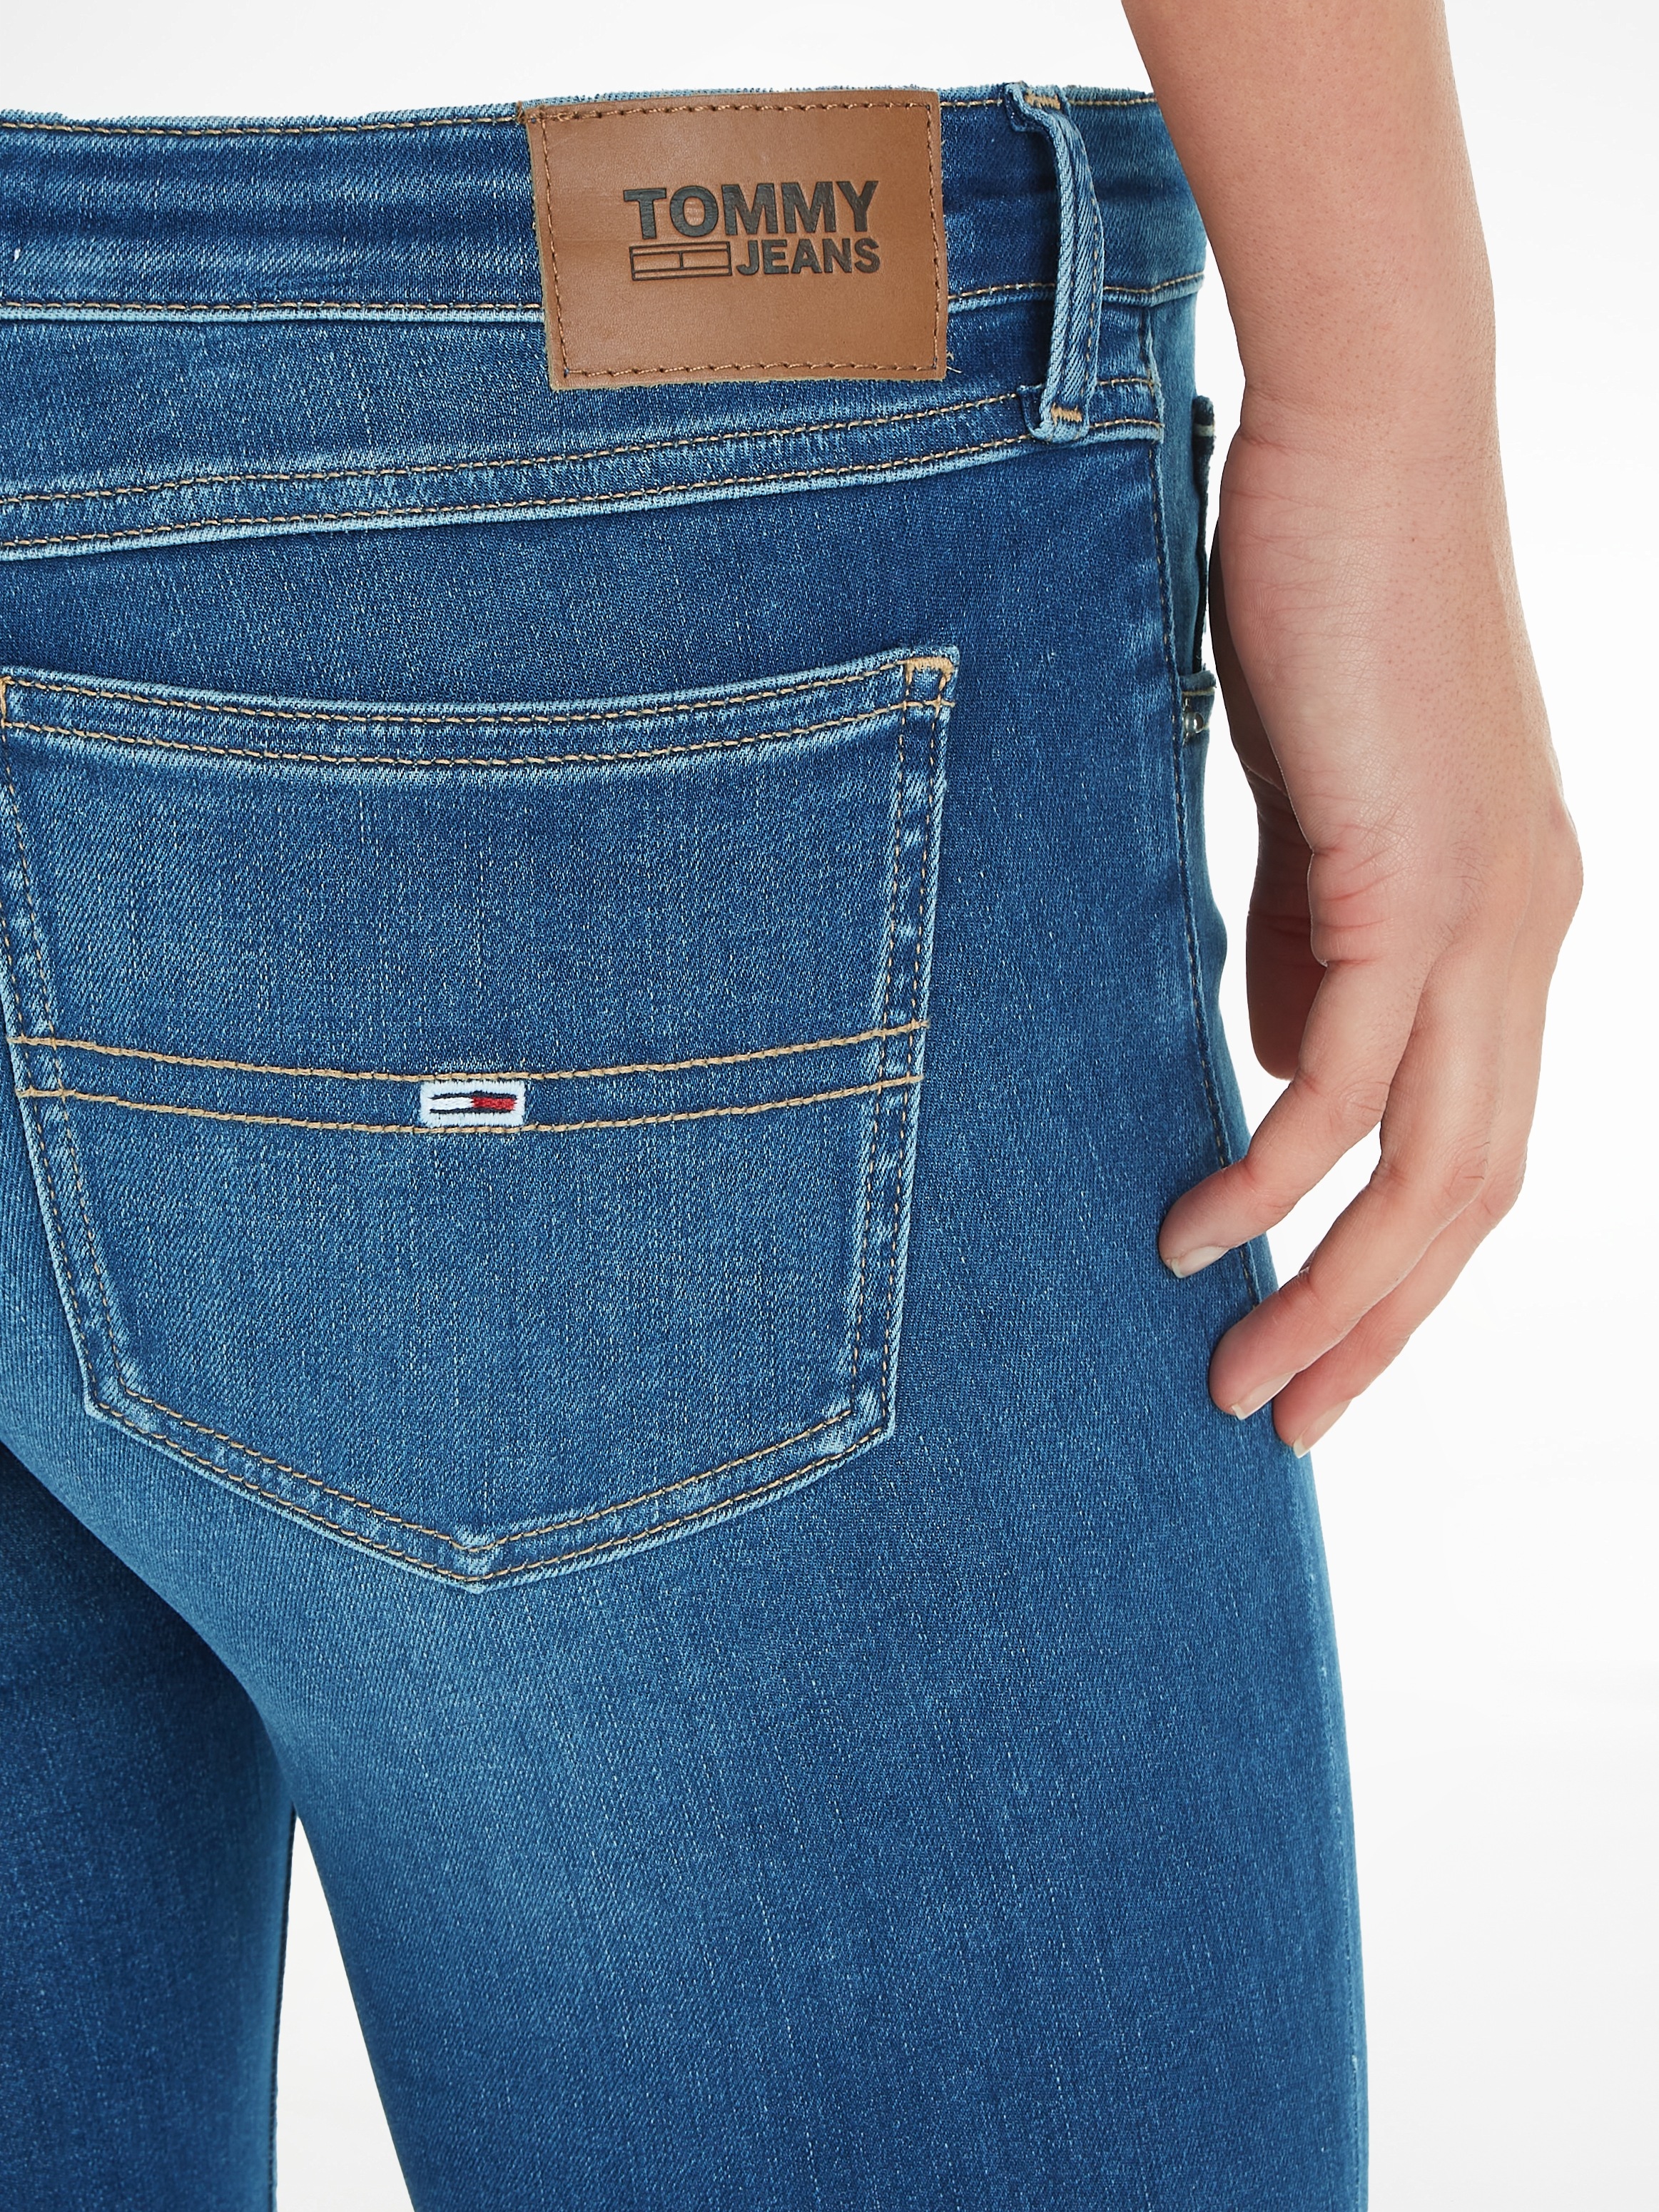 mit bestellen OTTO Tommy Jeans bei Labelapplikationen Skinny-fit-Jeans, dezenten